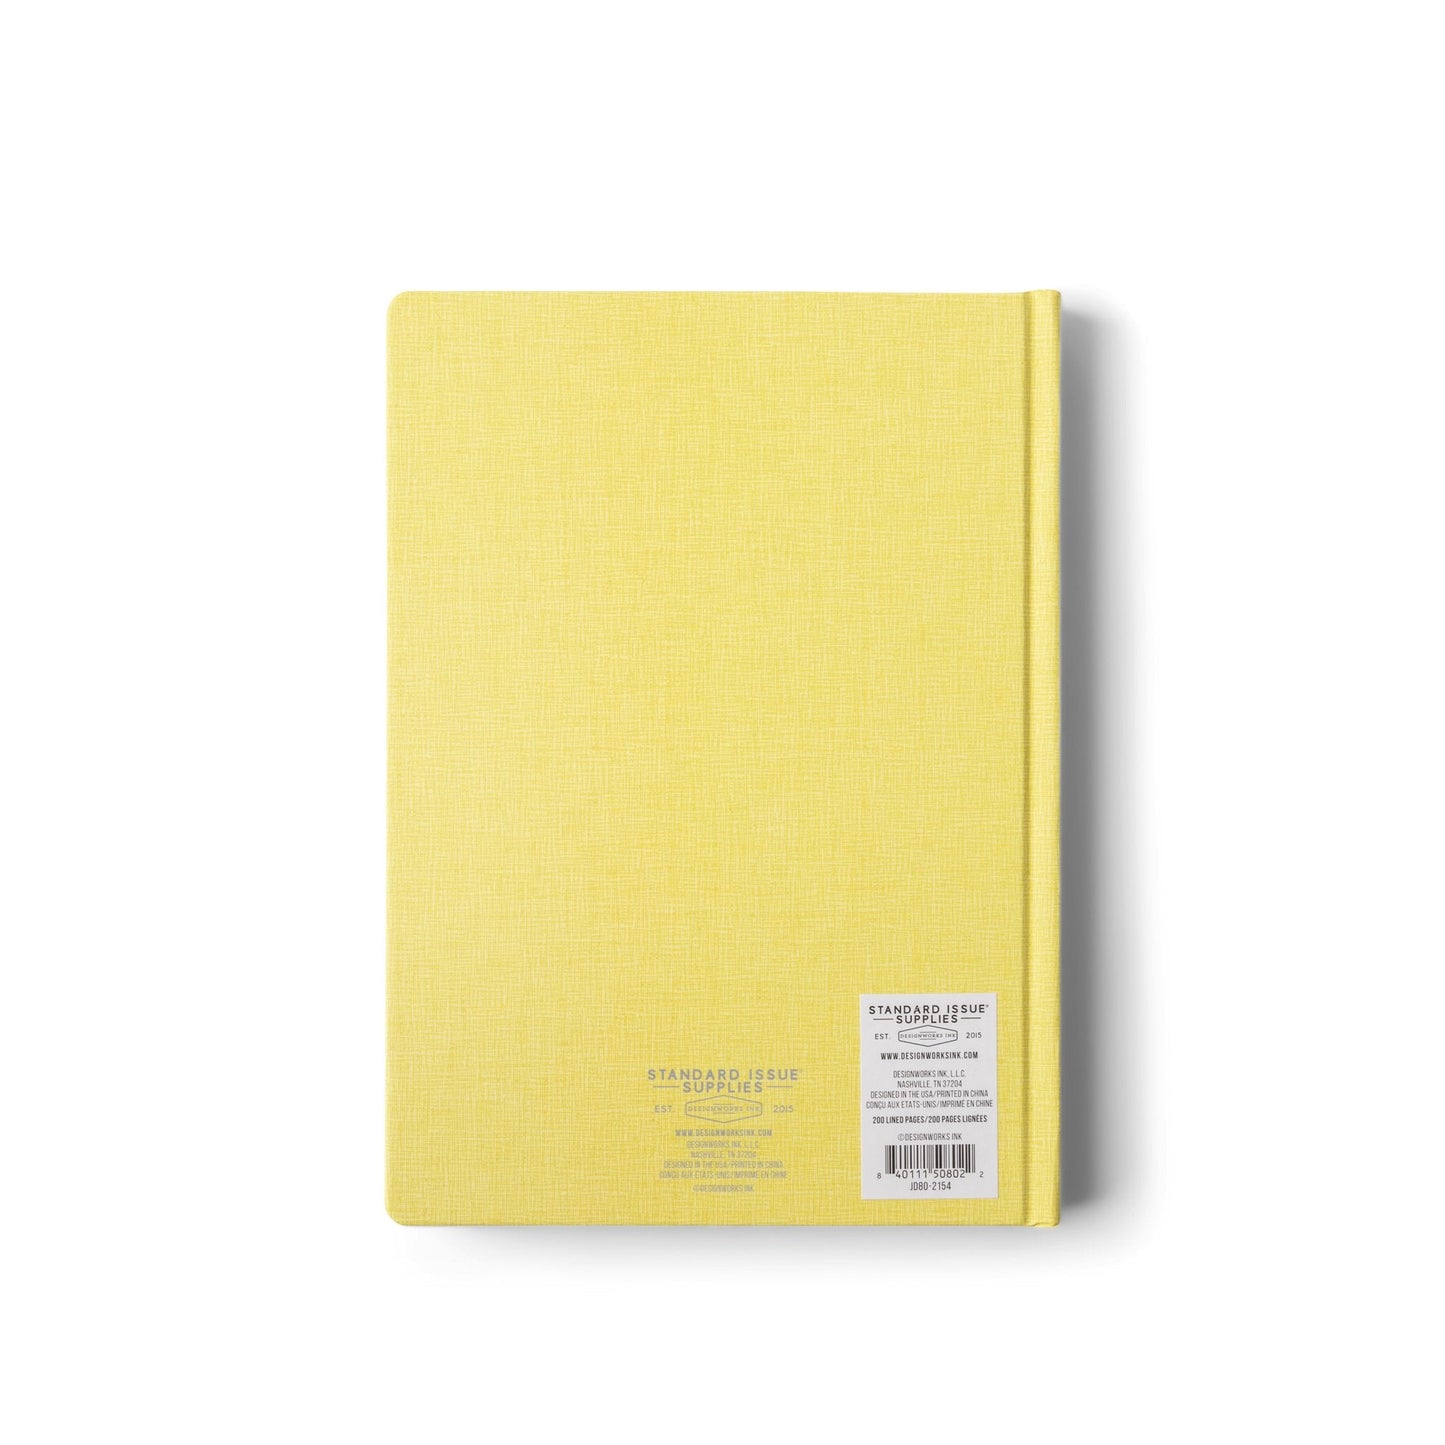 Standard Issue No. 80 Large Notebook - Ochre